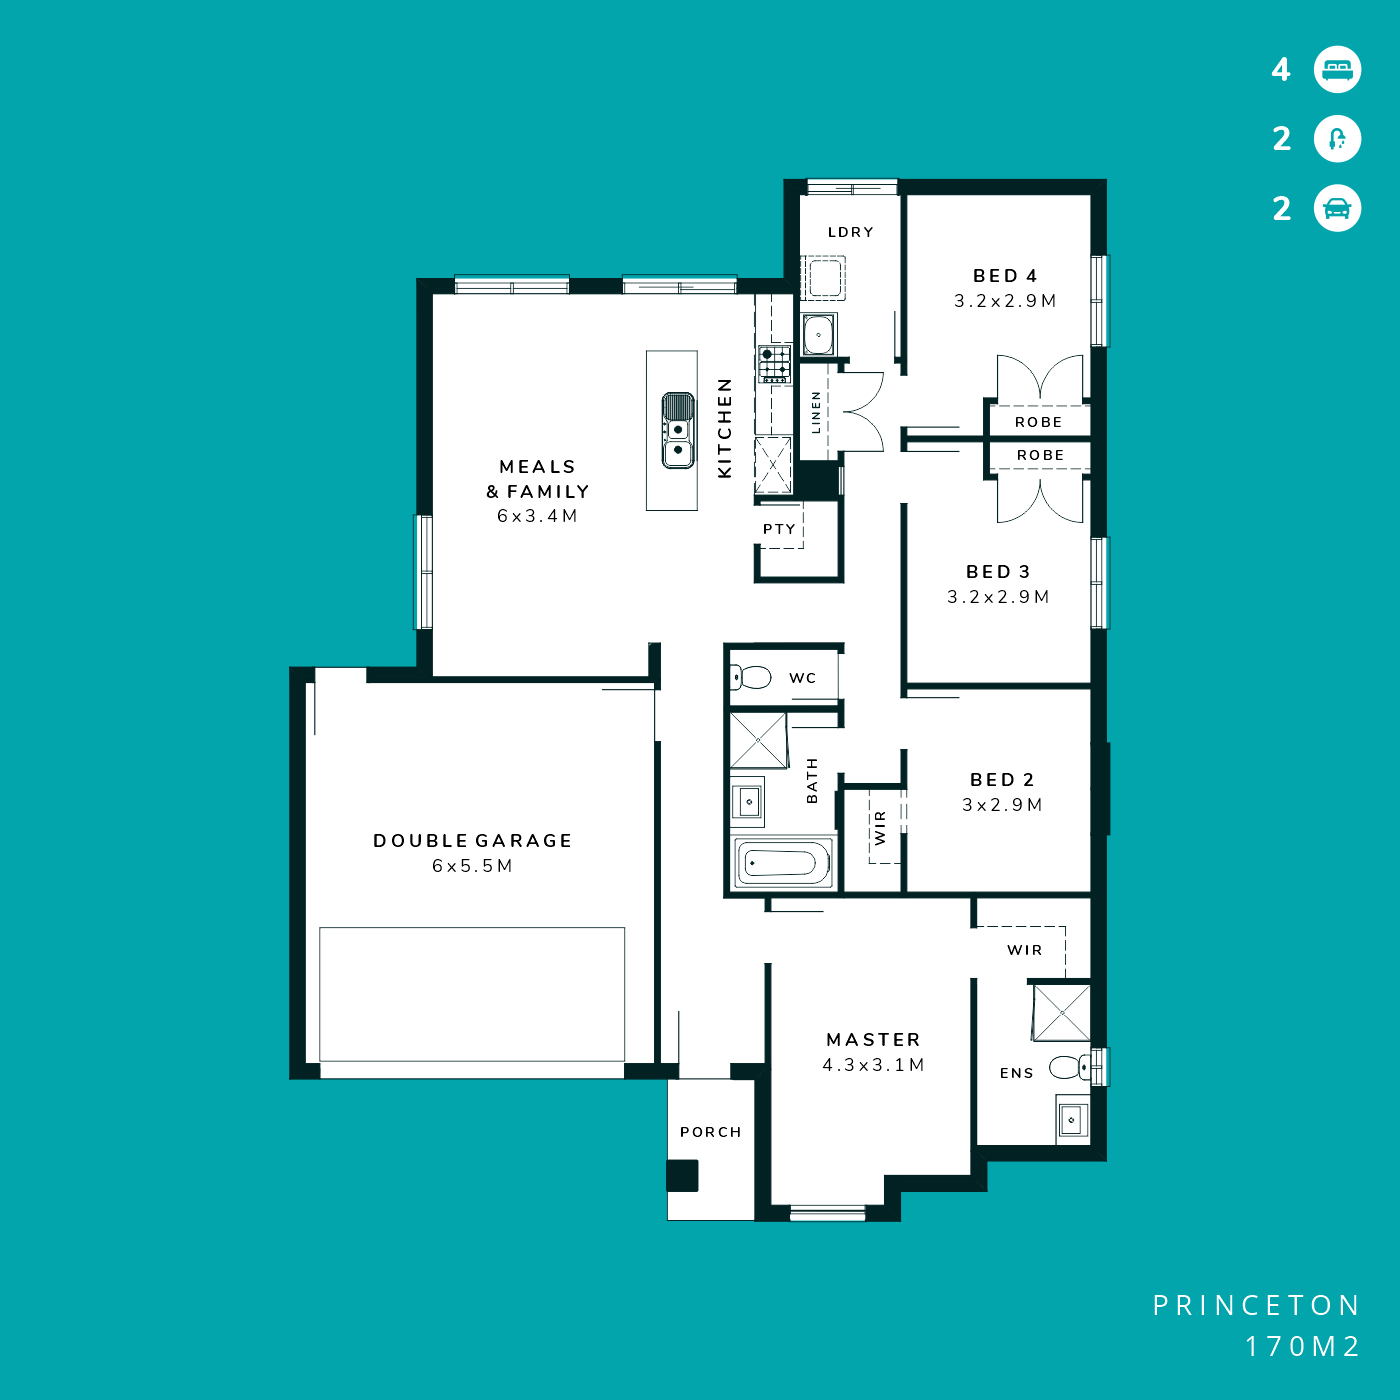 4 Bedroom Floorplan Victoria House & Land Design Low Deposit